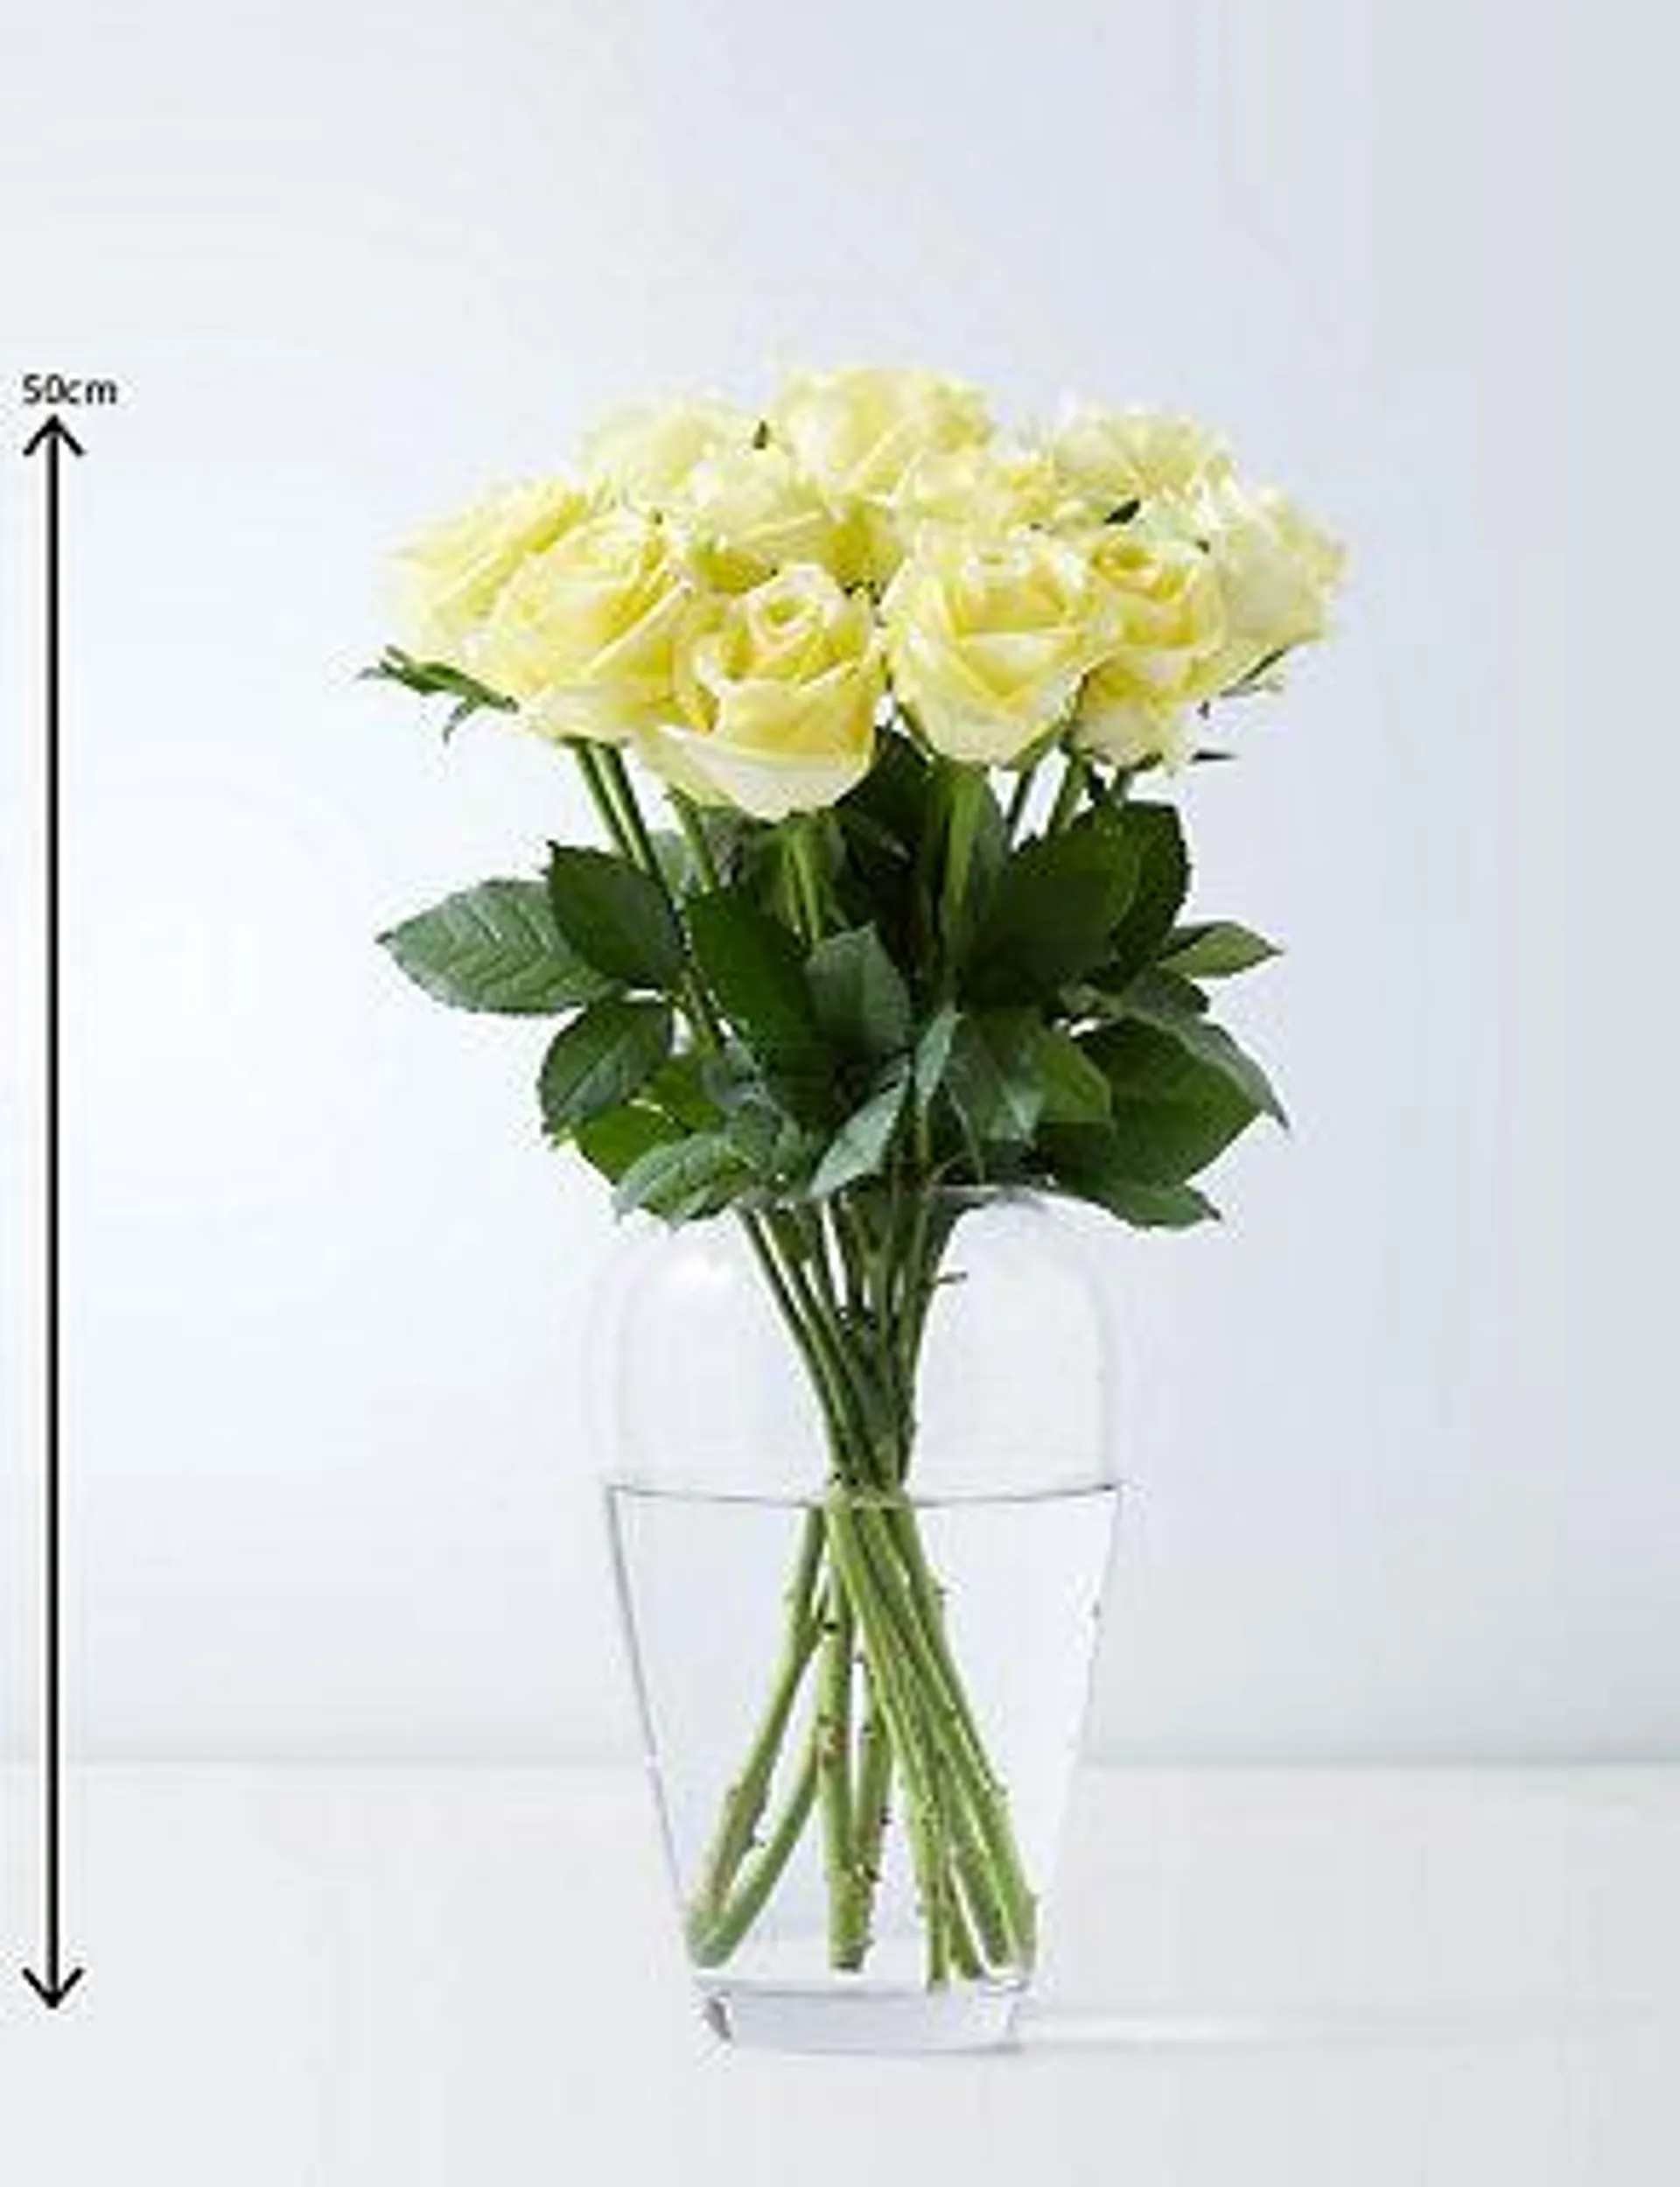 A Dozen Limoncello Roses Bouquet